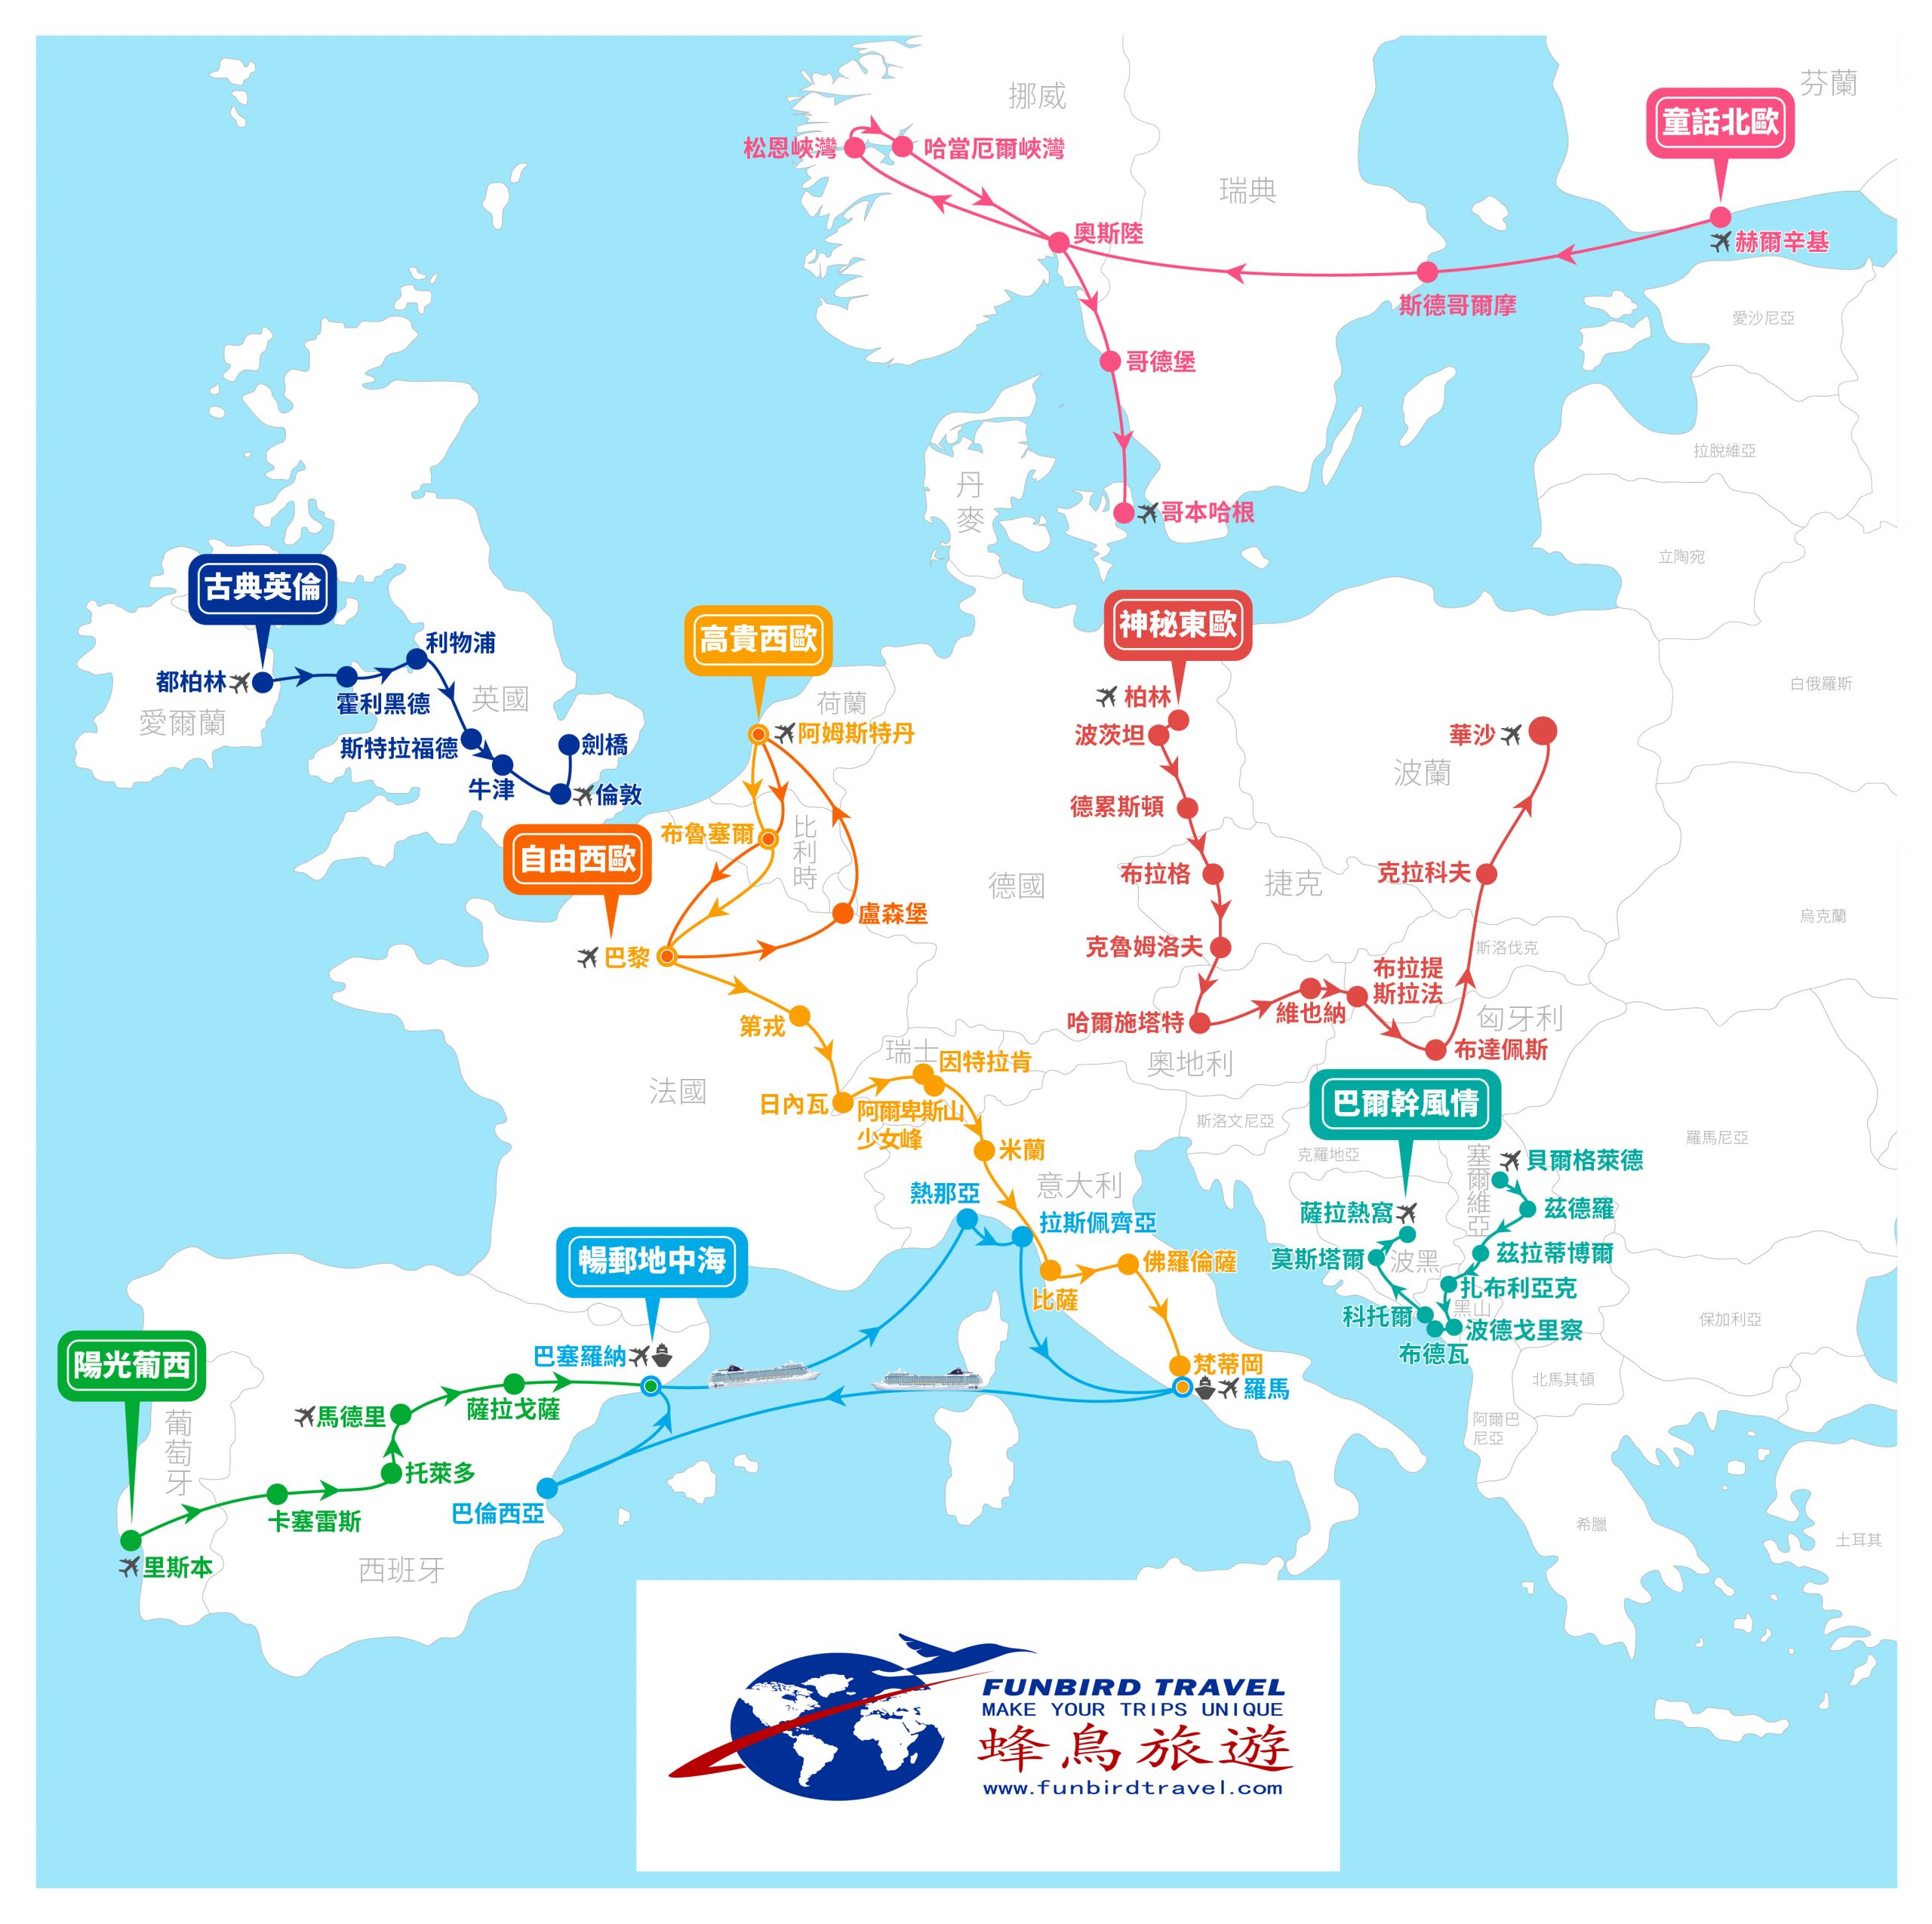 Europe Trips_map